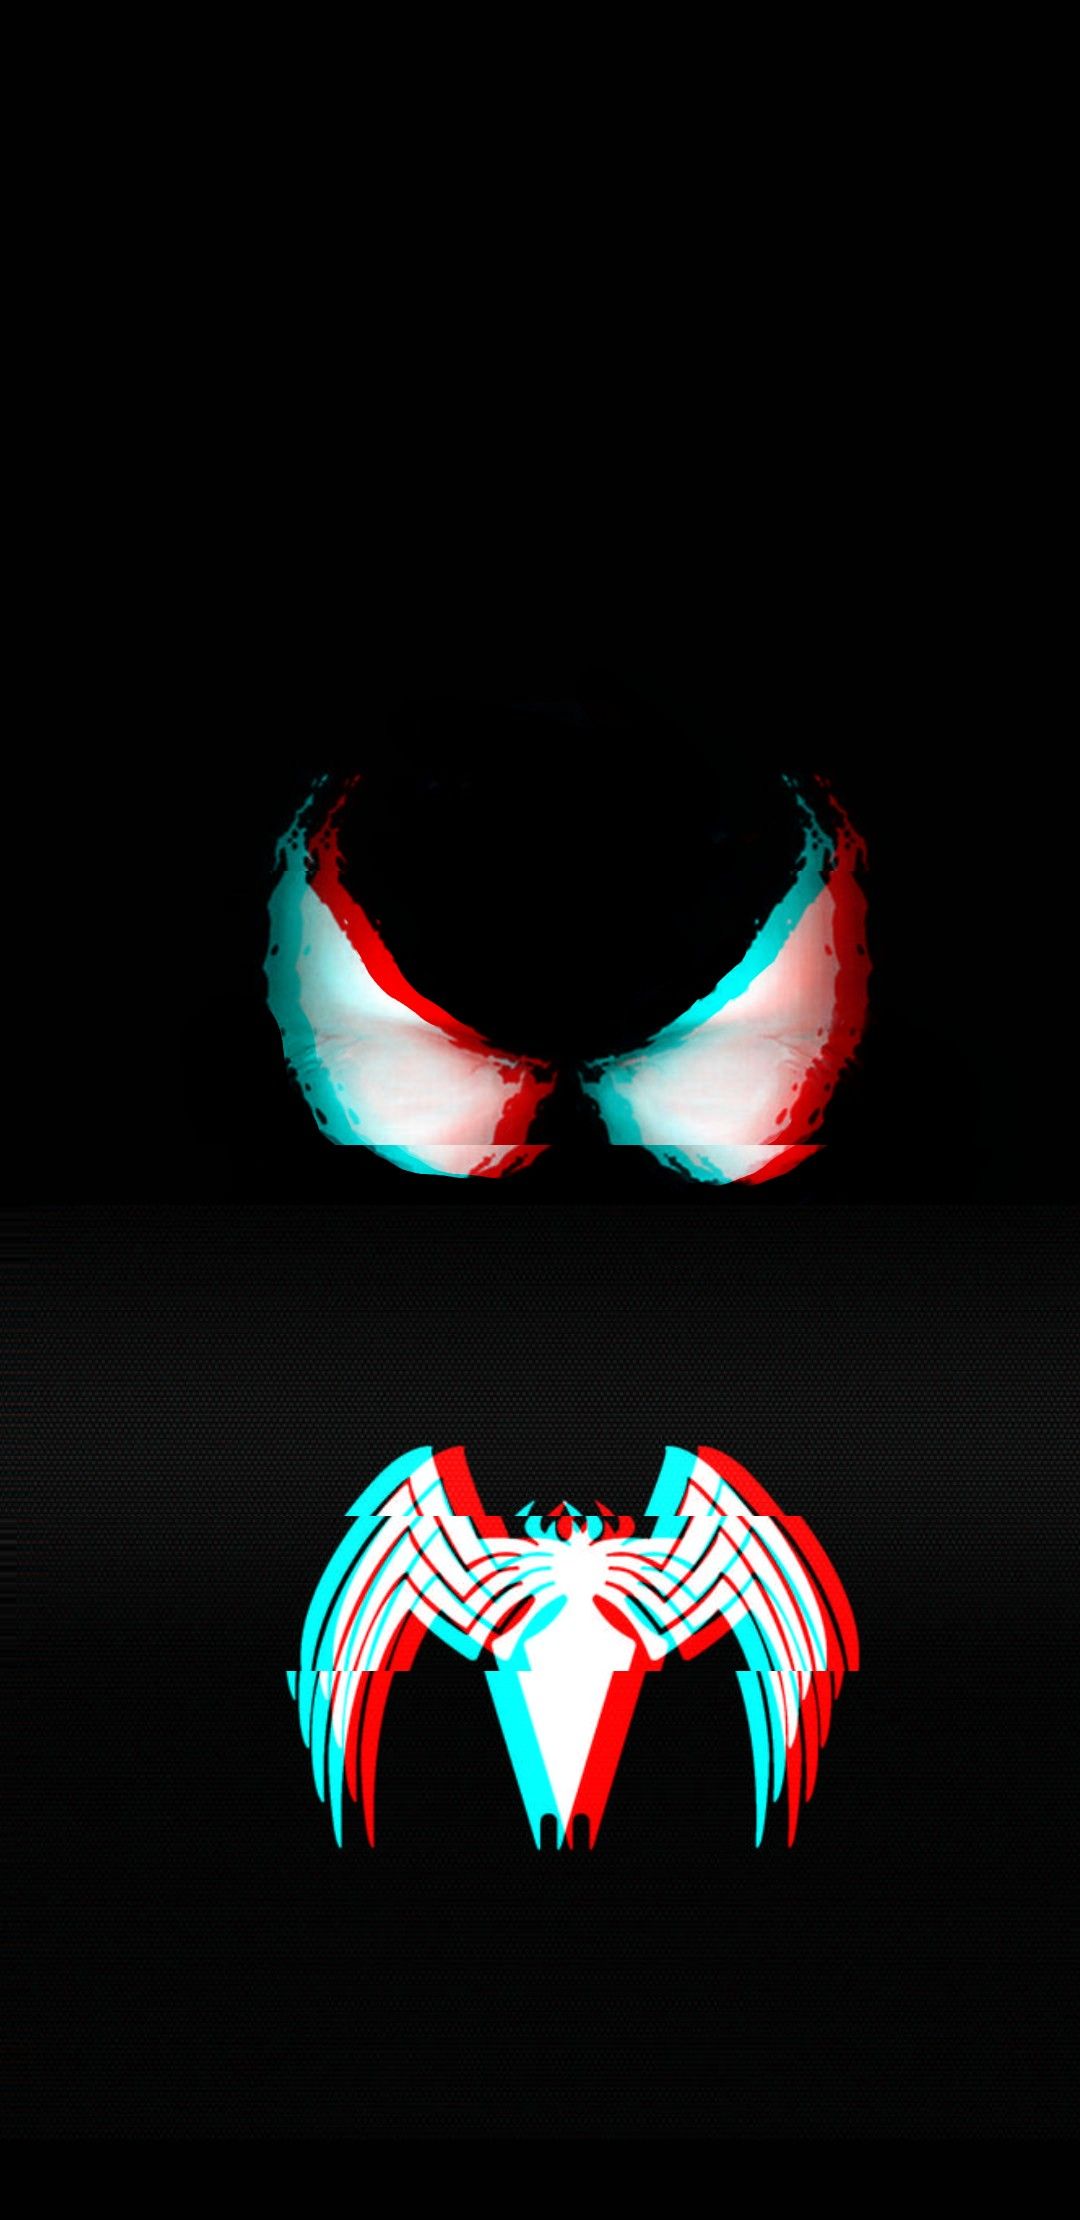 There you go, Symbiote Spiderman wallpaper !